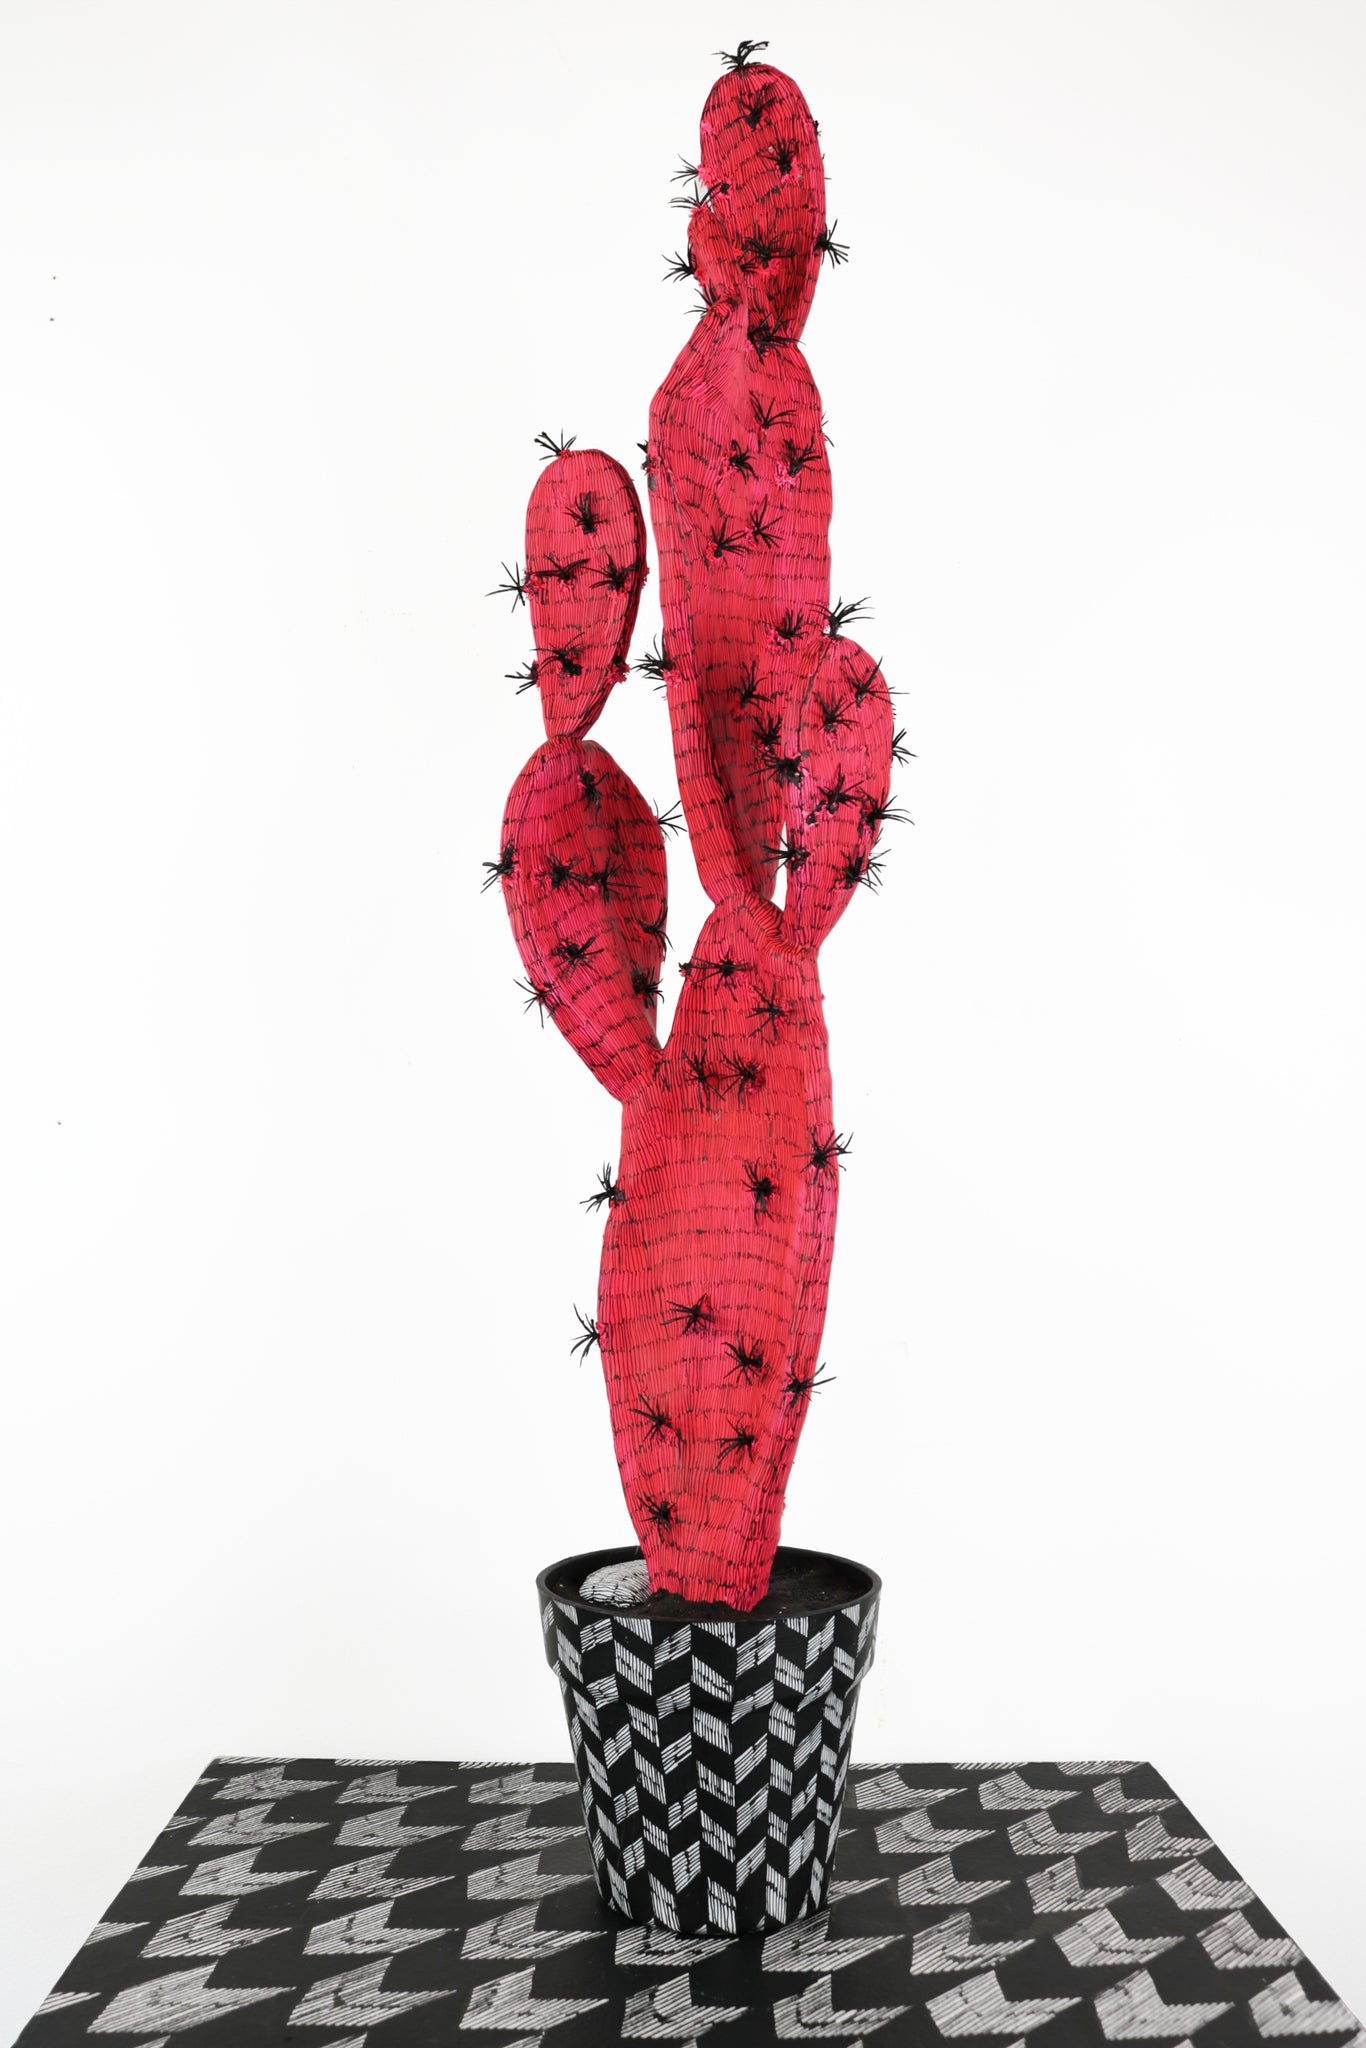 Anne Muntges, "Glowing Desert Artifact - Prickly Pear"